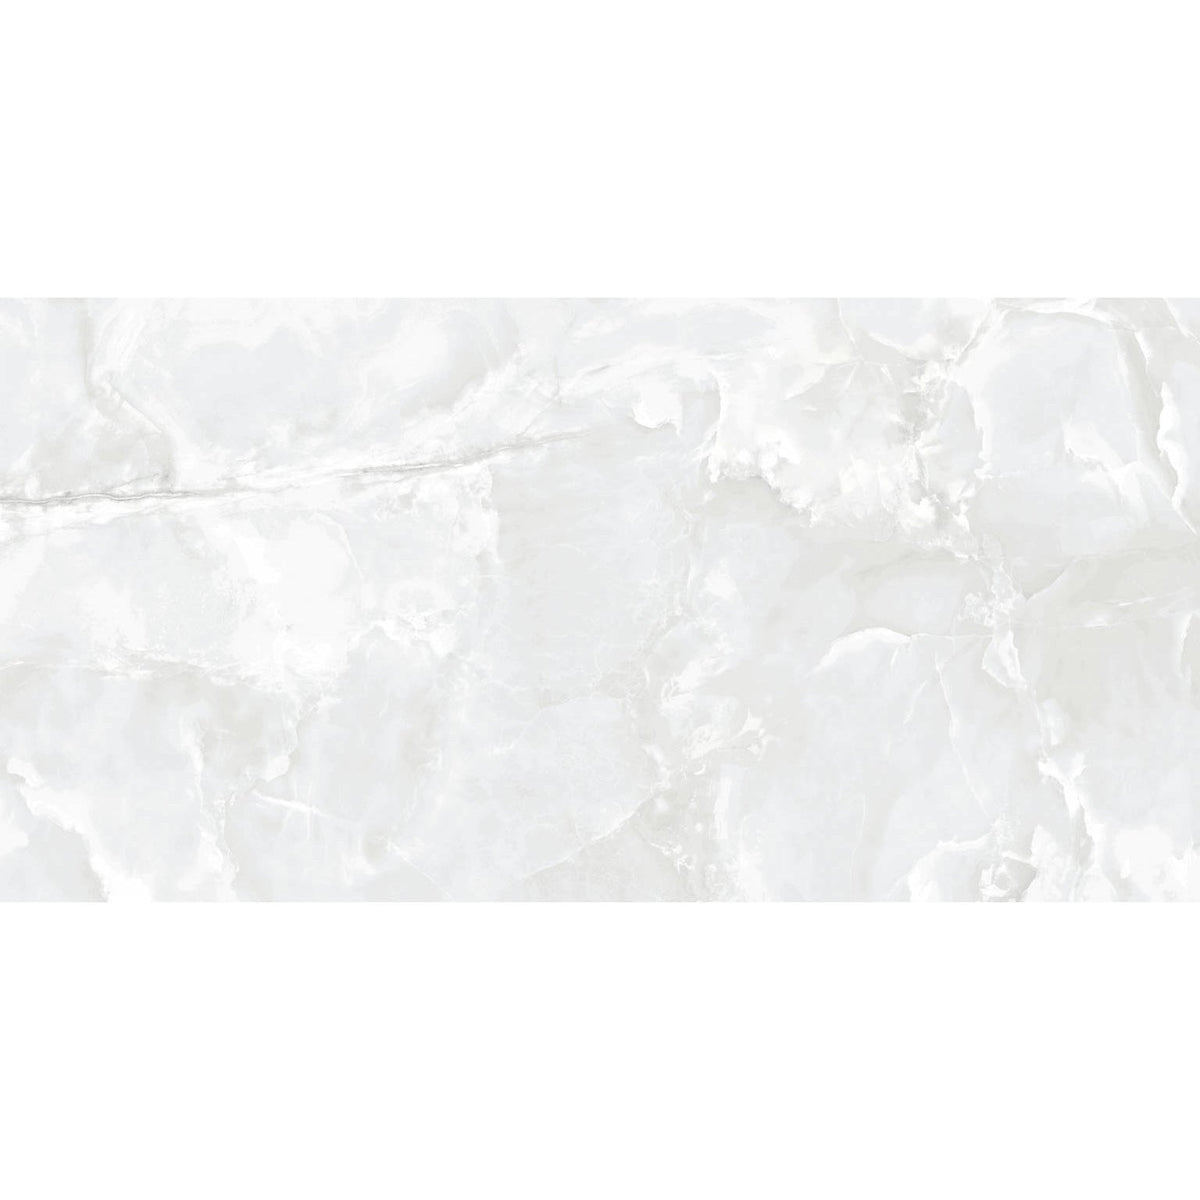 General Ceramic - Calacatta Eternal Series 12 in. x 24 in. Matte Rectified Porcelain Tile - White